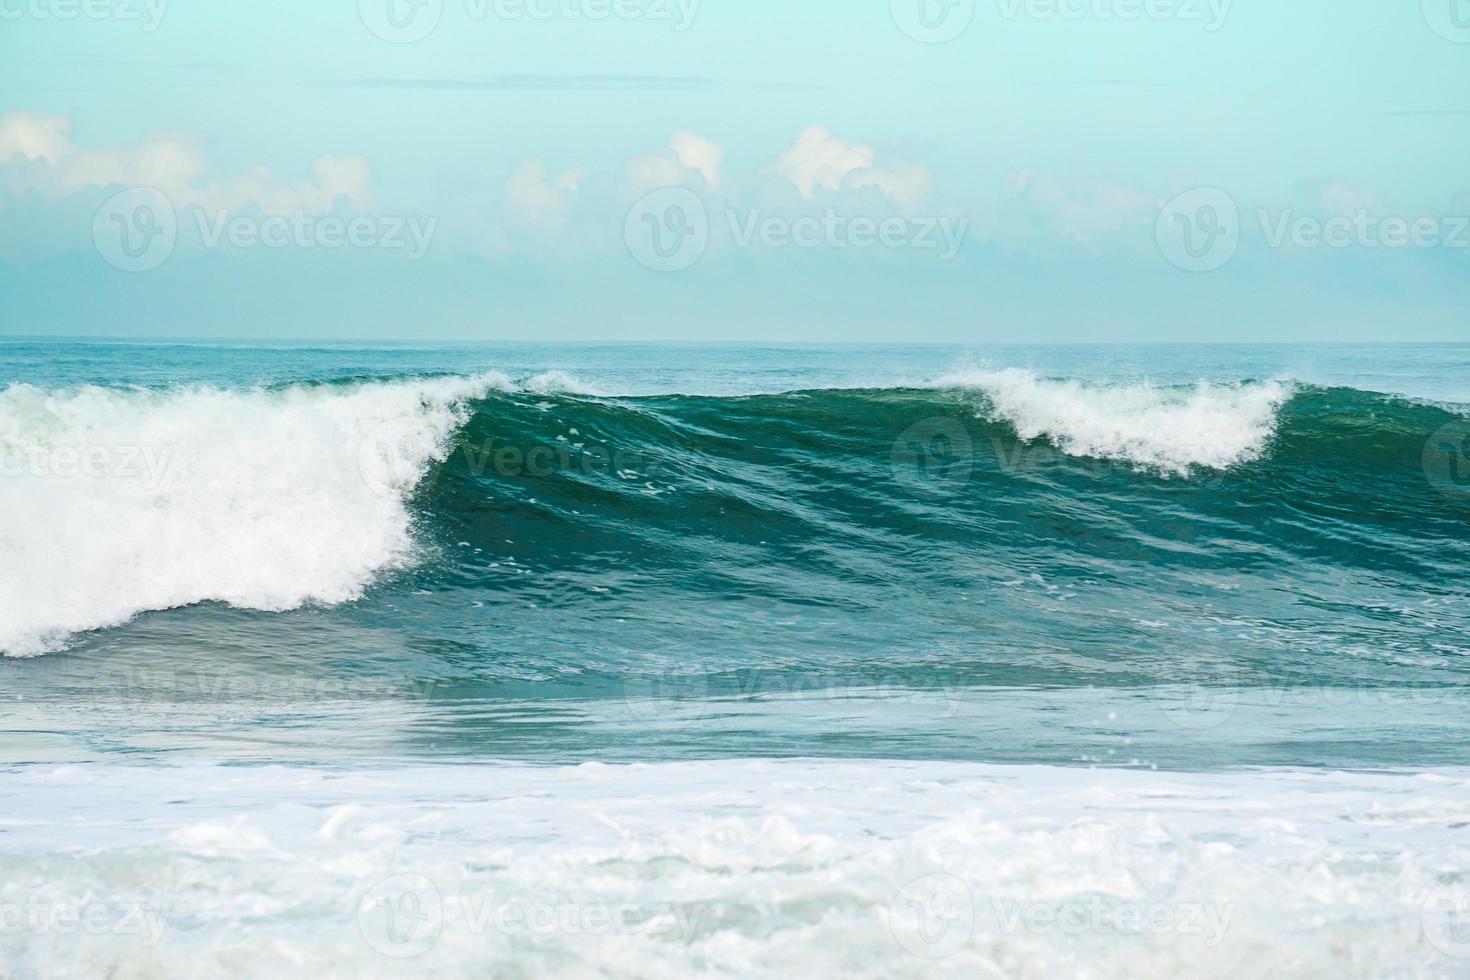 vågor på det blå havet vid kusten foto